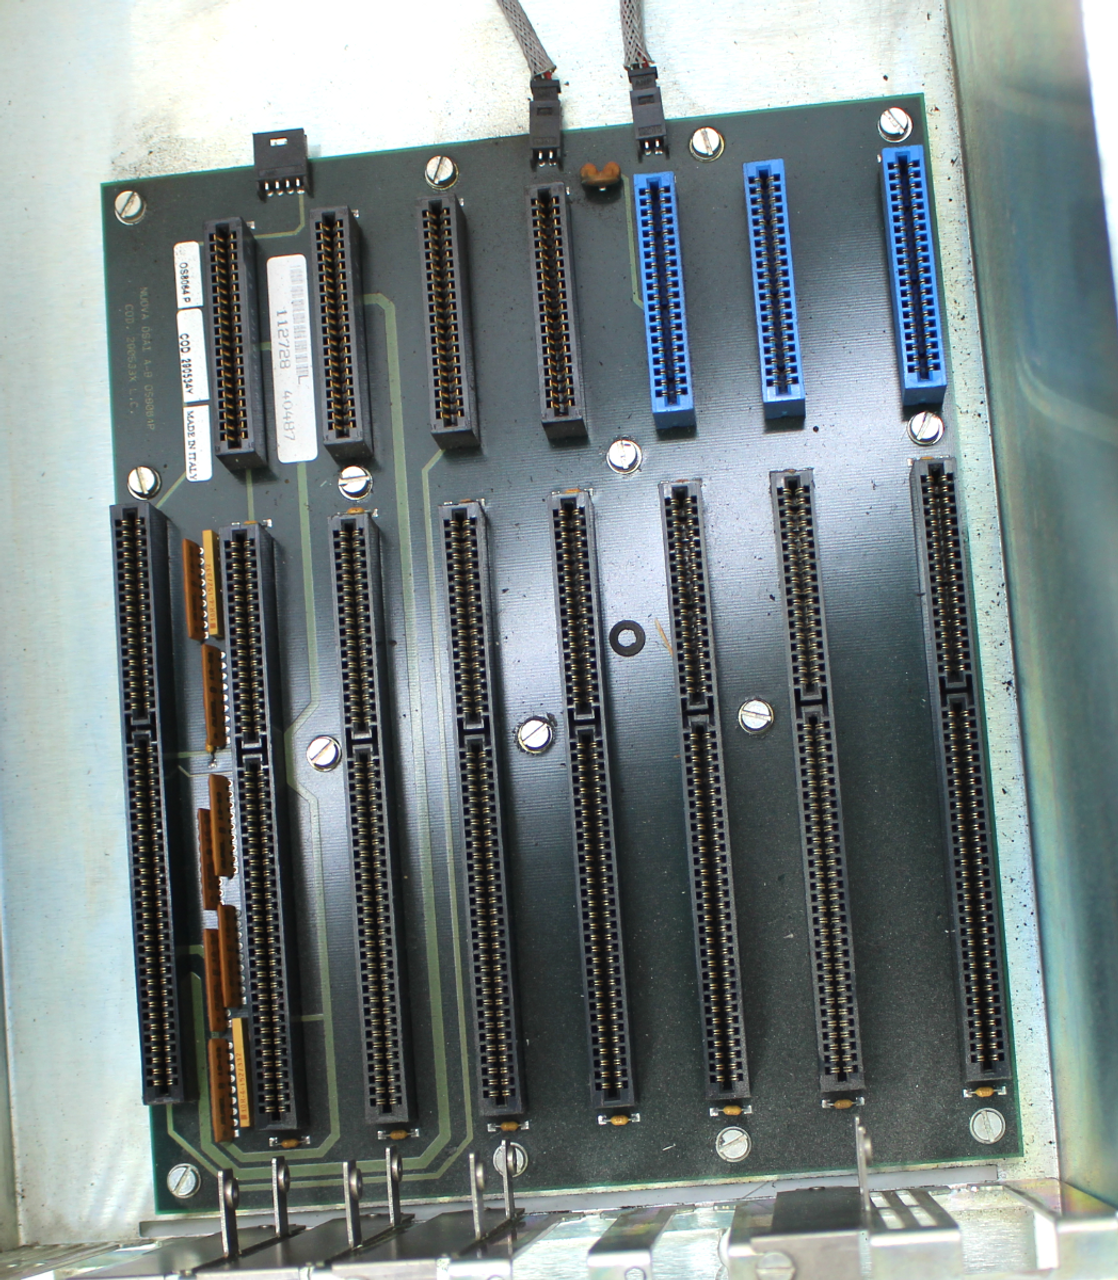 OSAI 9300416P Power Supply Rack